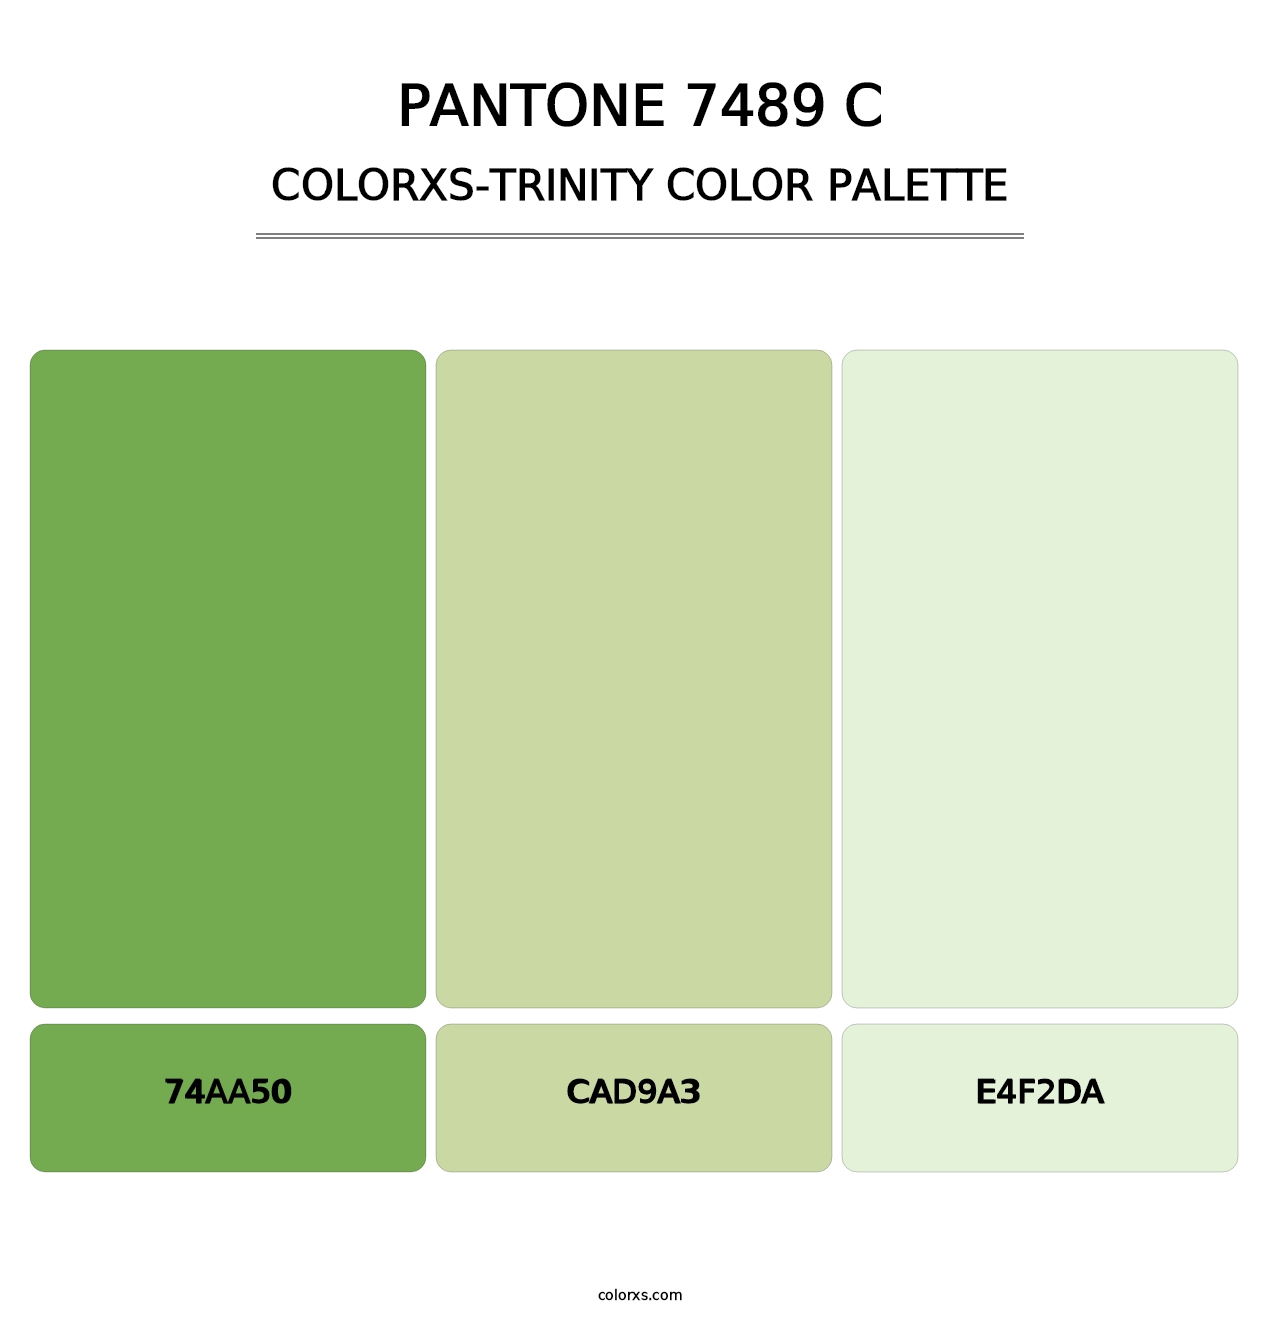 PANTONE 7489 C - Colorxs Trinity Palette